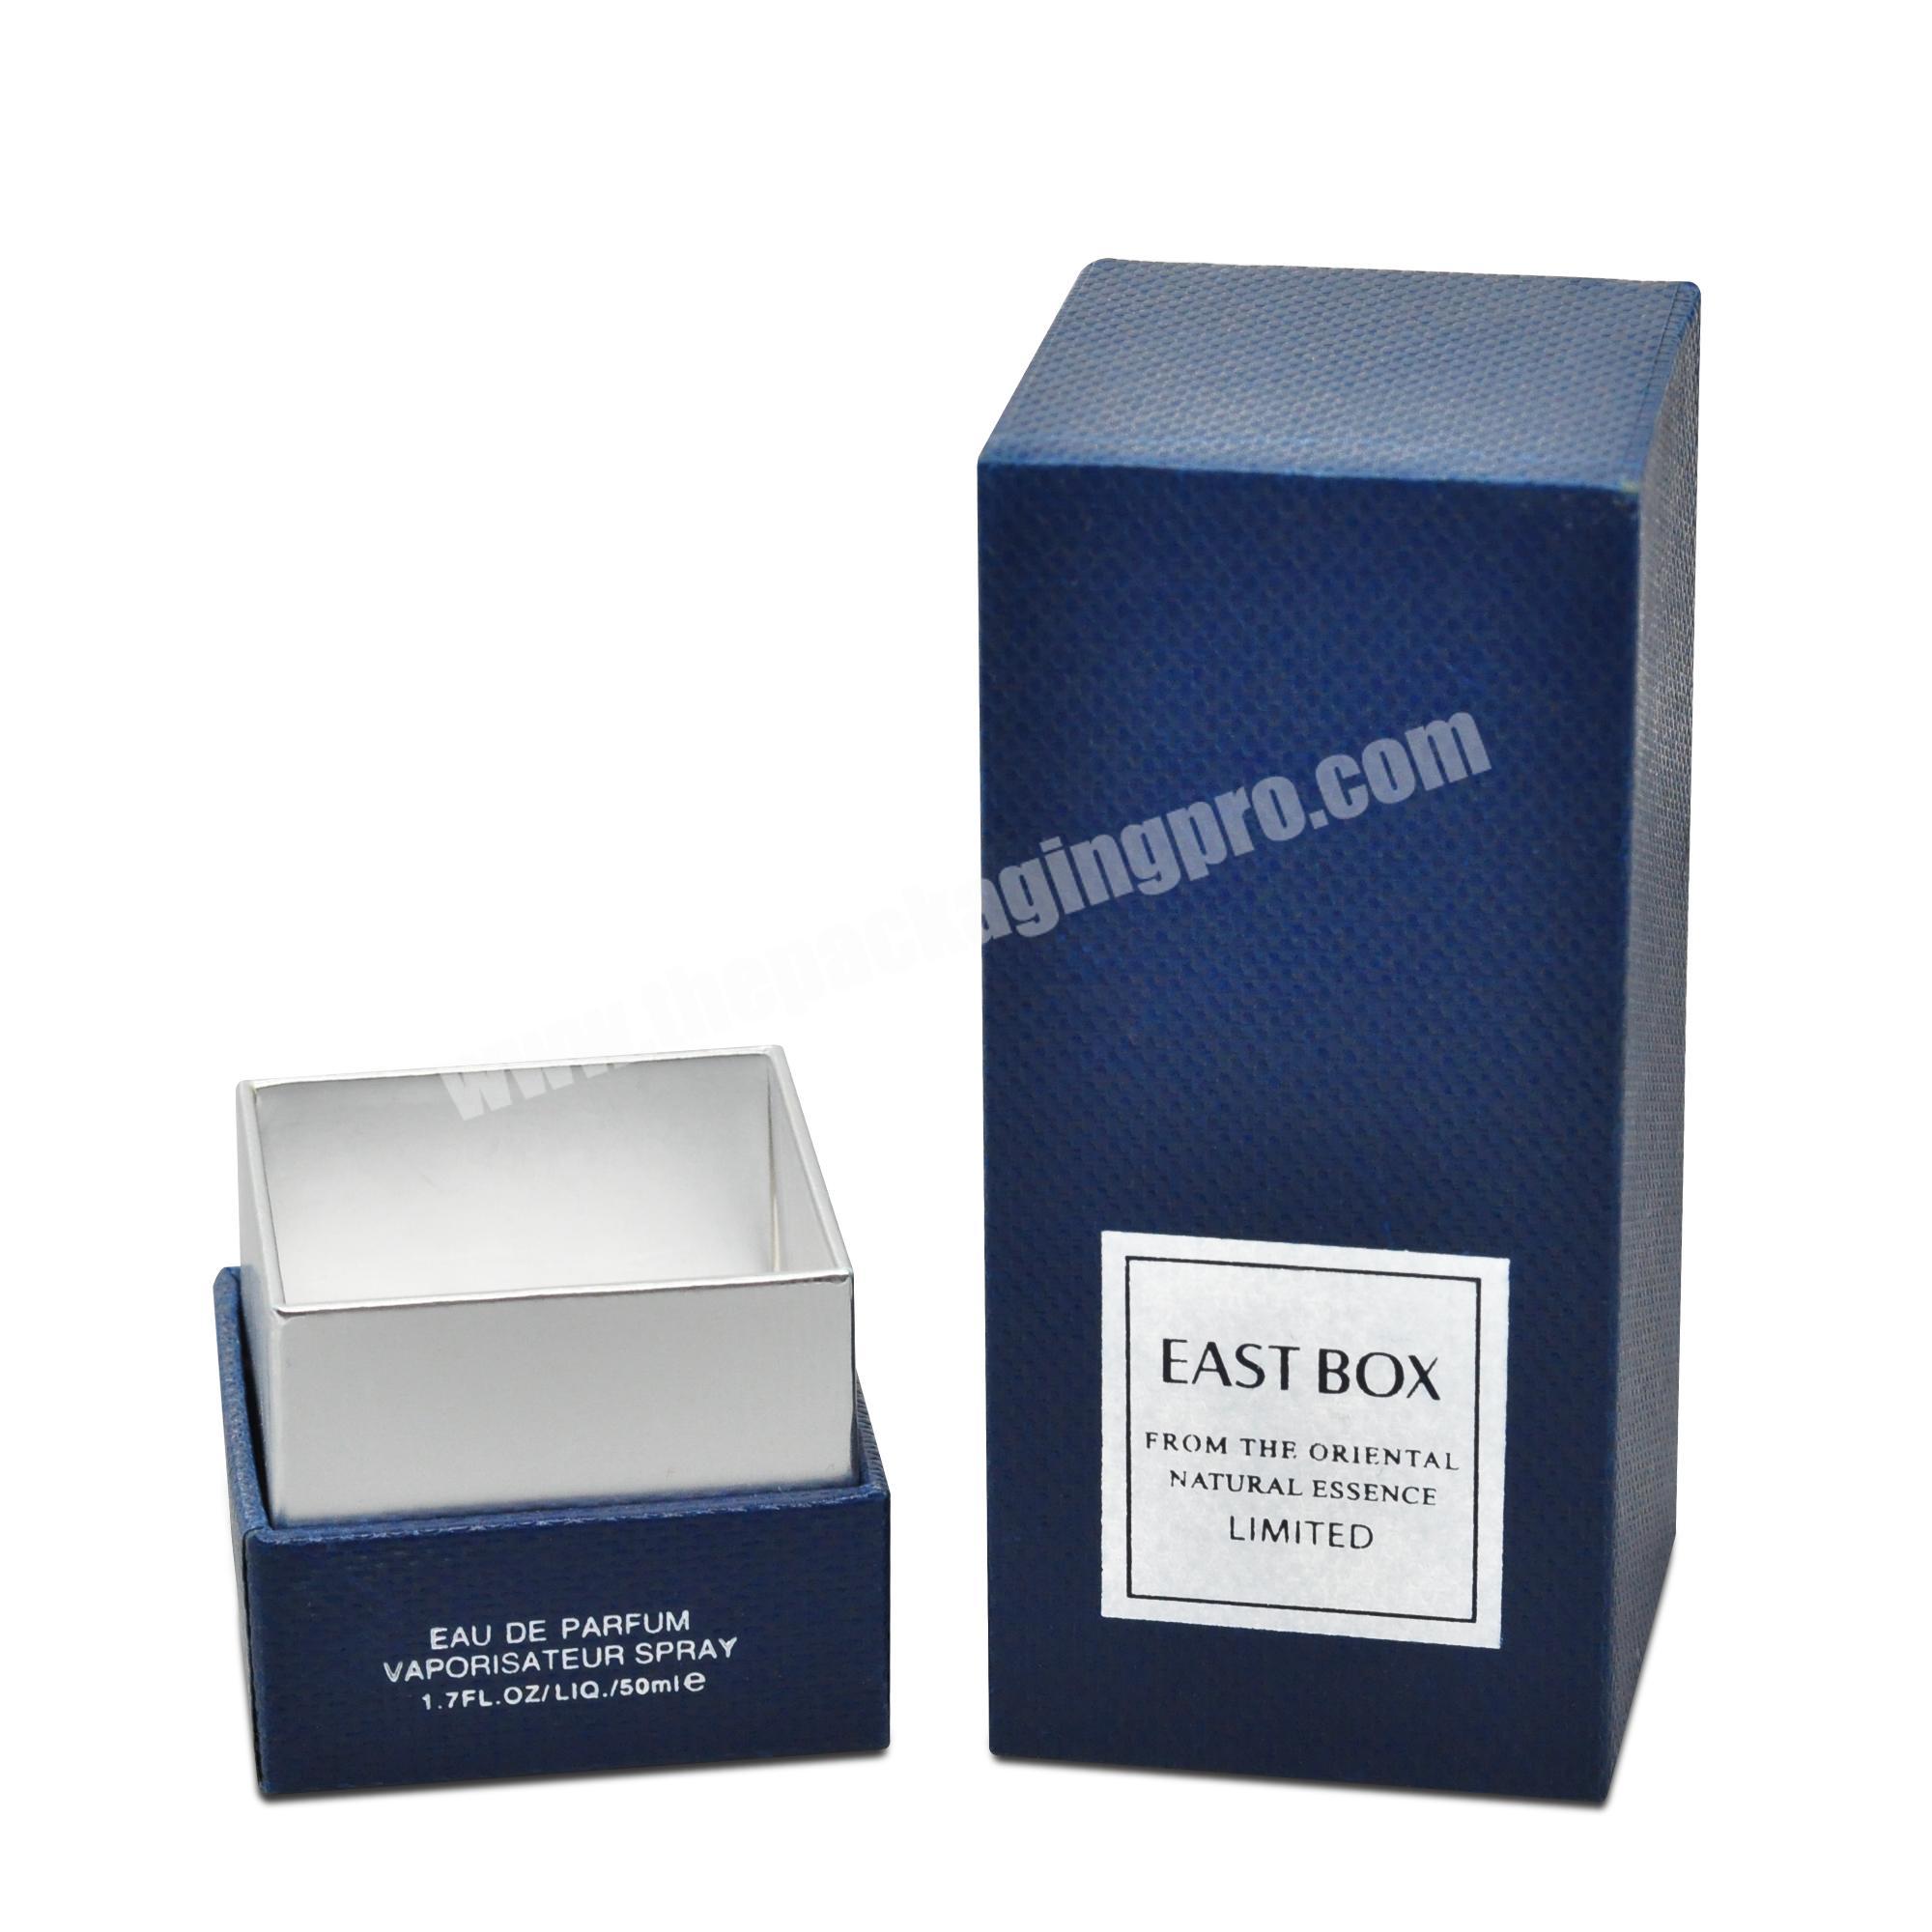 Perfume Boxes Packaging, Dior Perfume Packaging